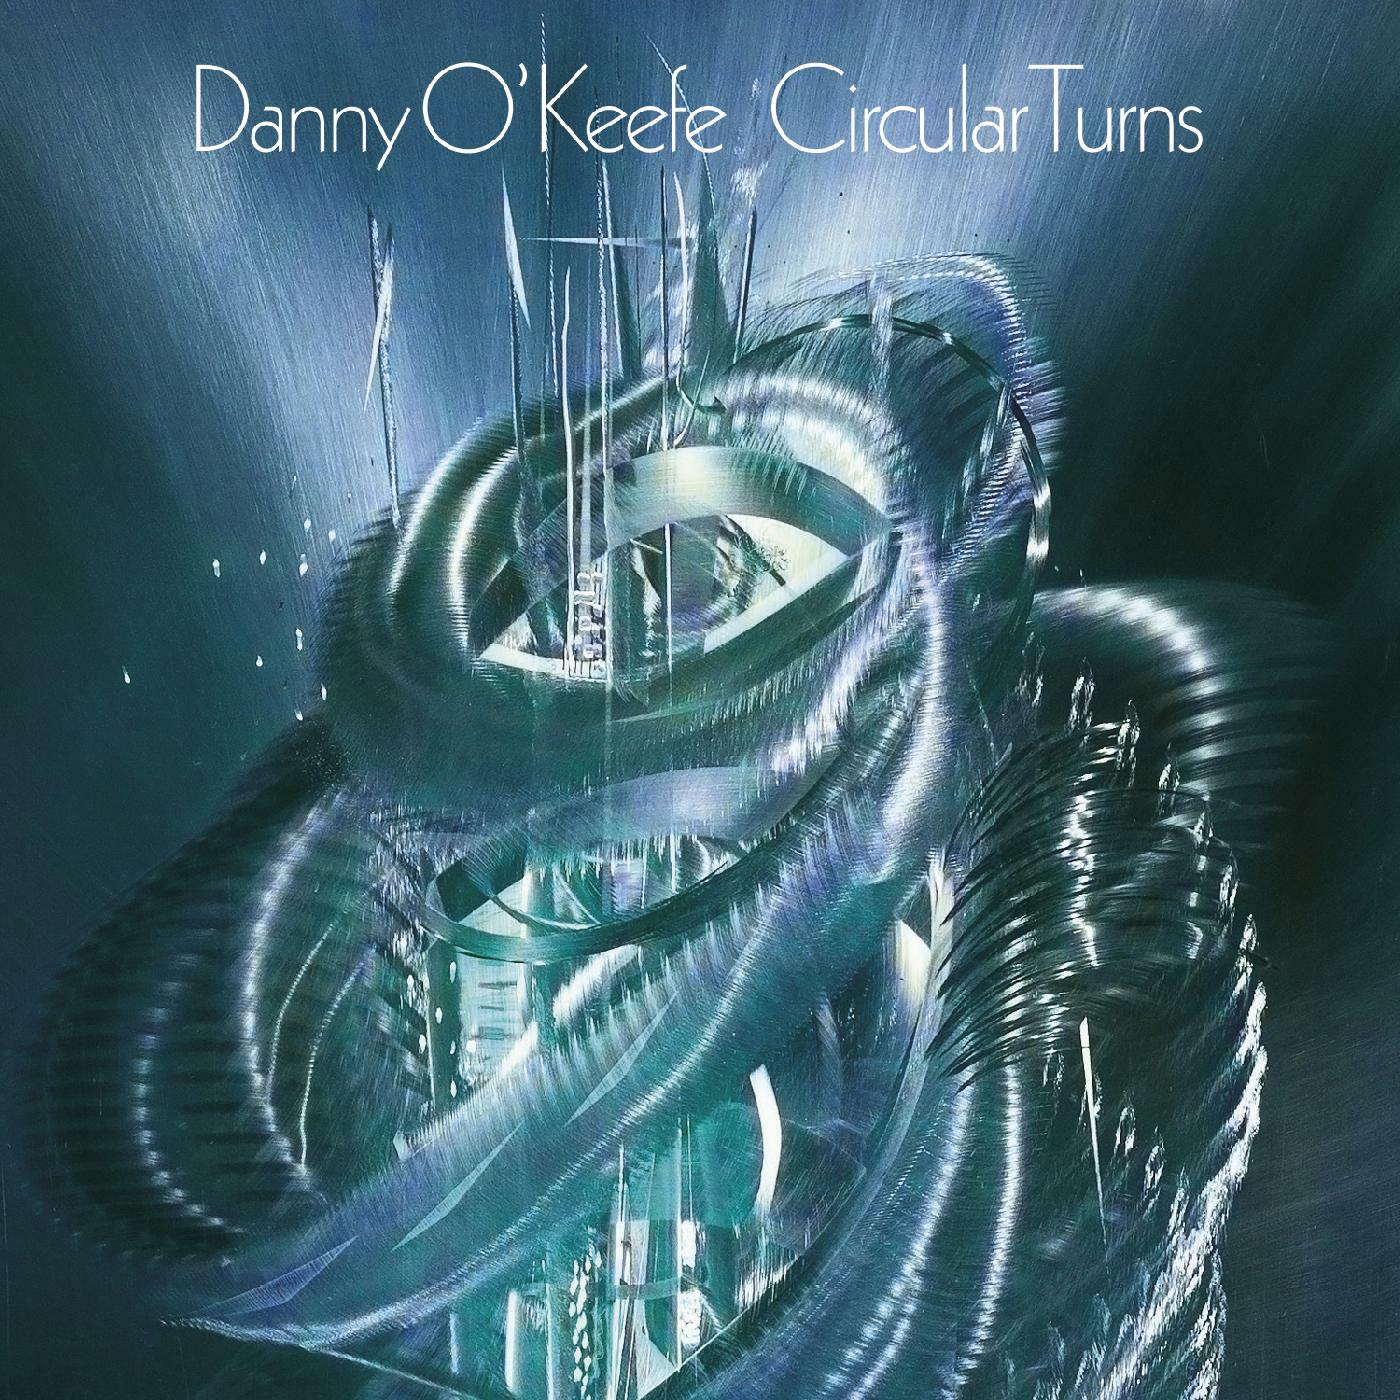 Danny O'Keefe - Soul Provider